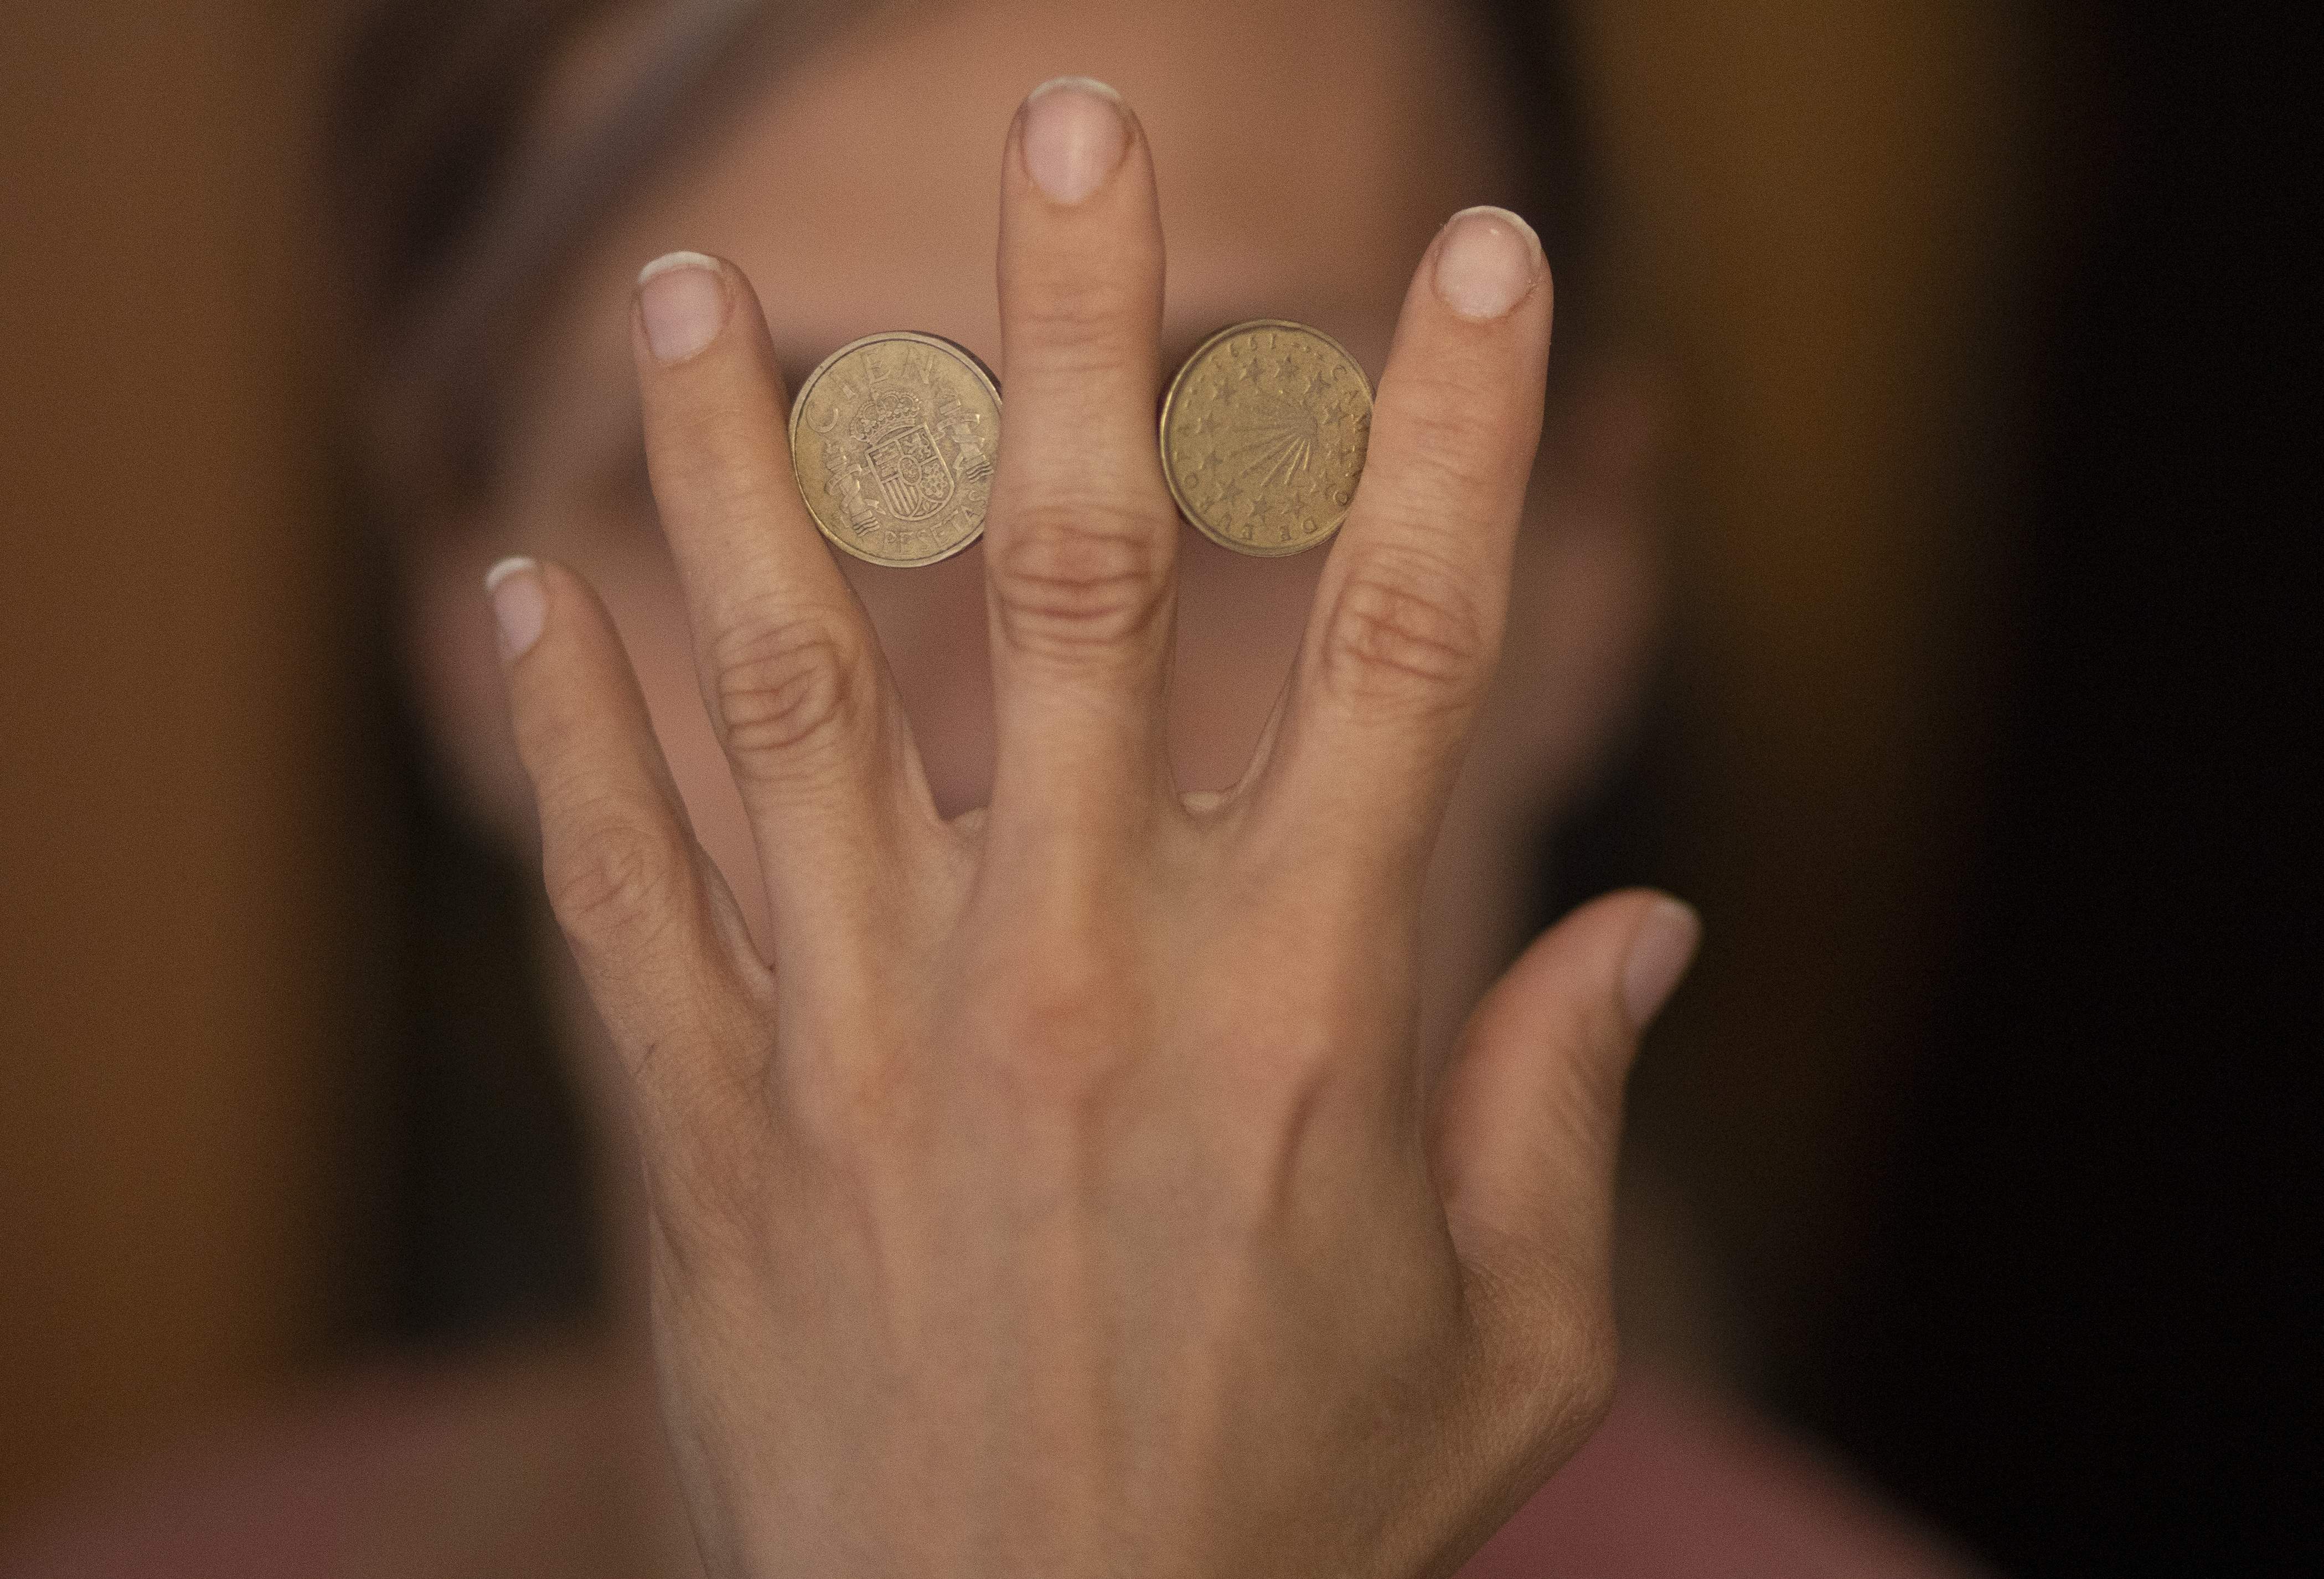 EuropaPress 3813763 mujer sostiene dos monedas antiguas pesetas 14 junio 2021 madrid espana